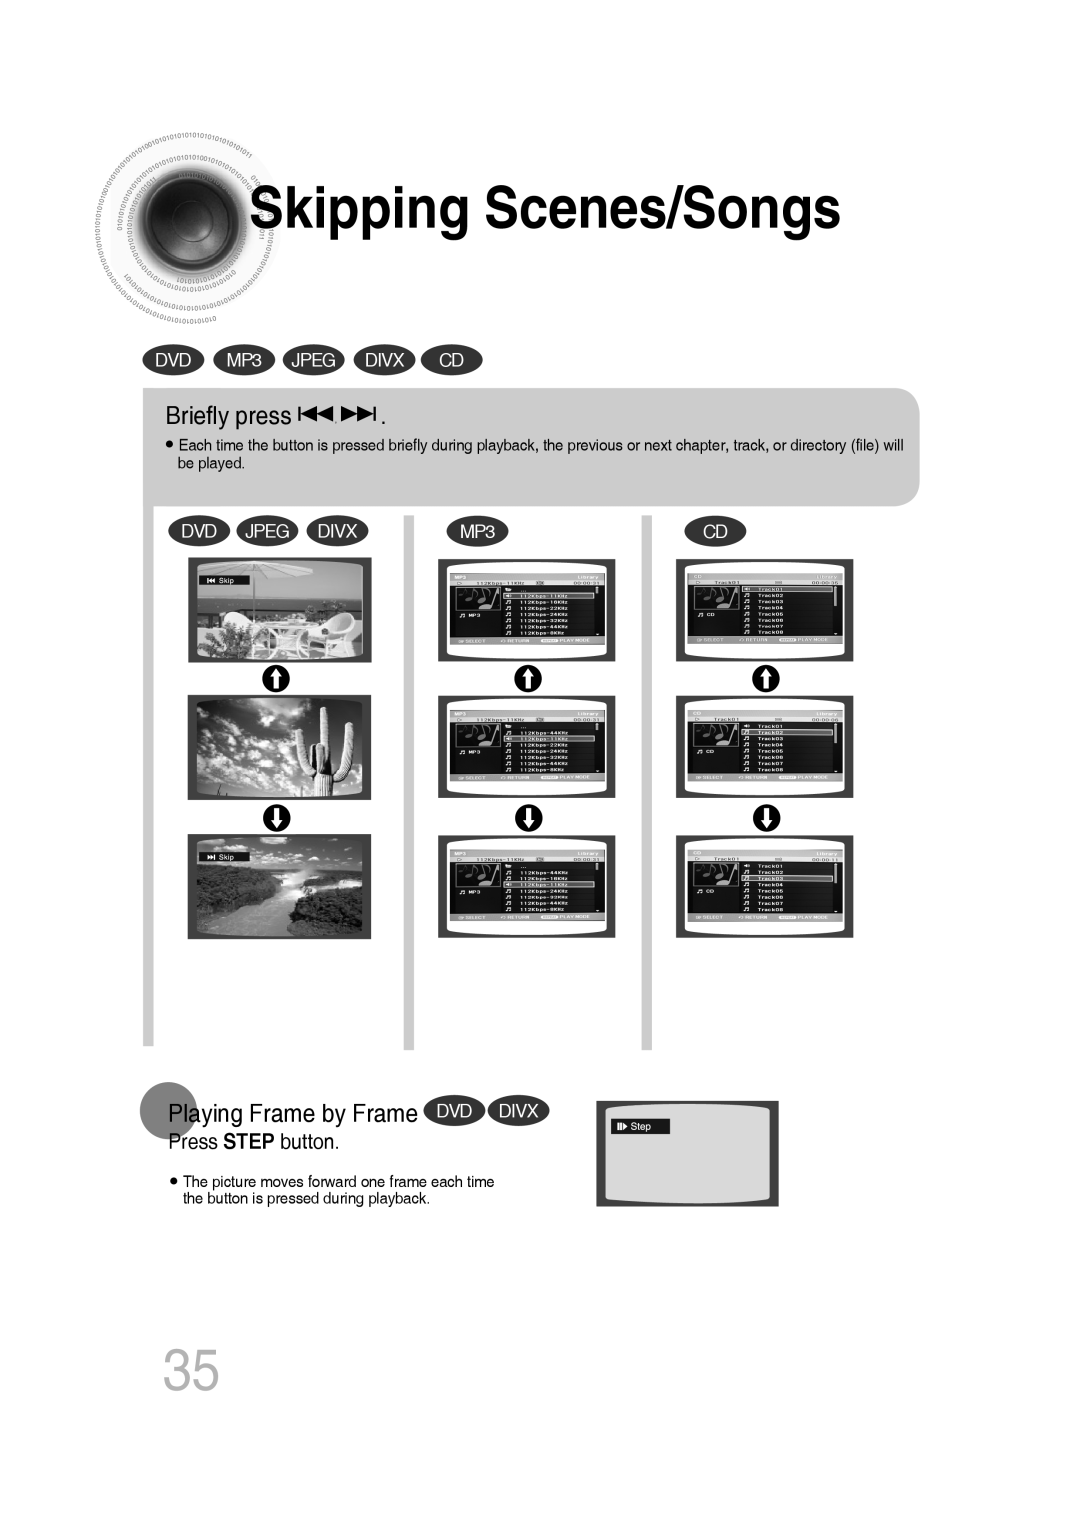 Samsung MM-C530D Skipping Scenes/Songs, Briefly press, Playing Frame by Frame DVD DIVX, Press STEP button, Dvd Jpeg Divx 